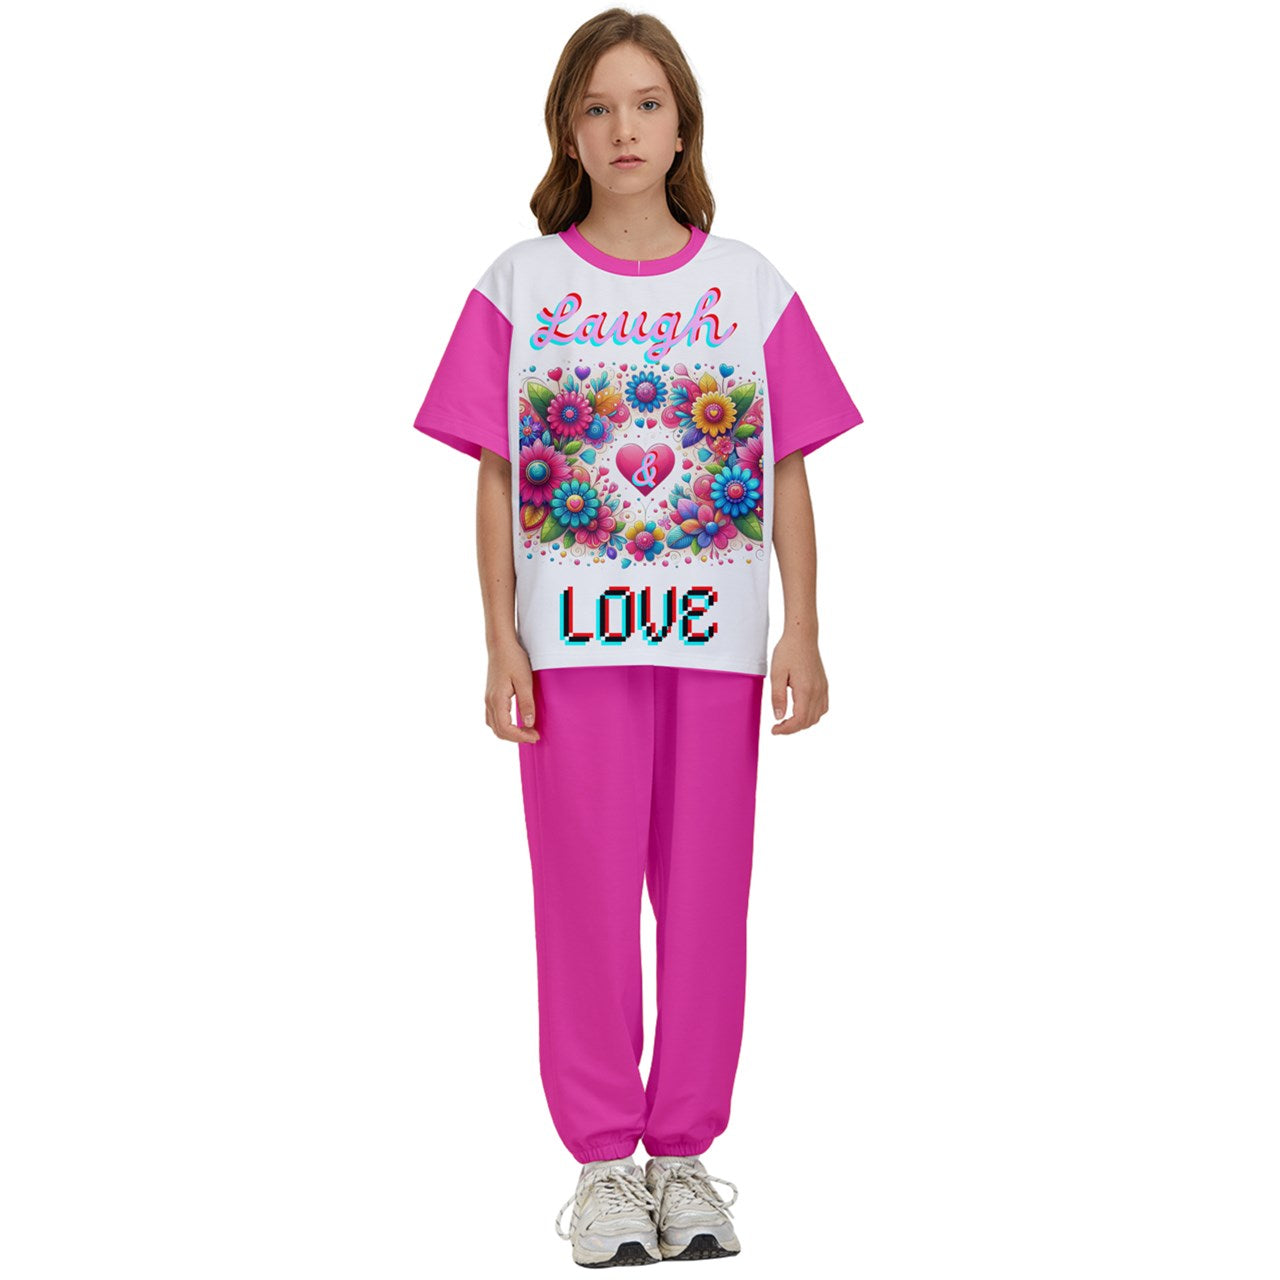 Laugh Love 2 - Kids' T-Shirt and Pants Outfit Set - girls pants set at TFC&H Co.